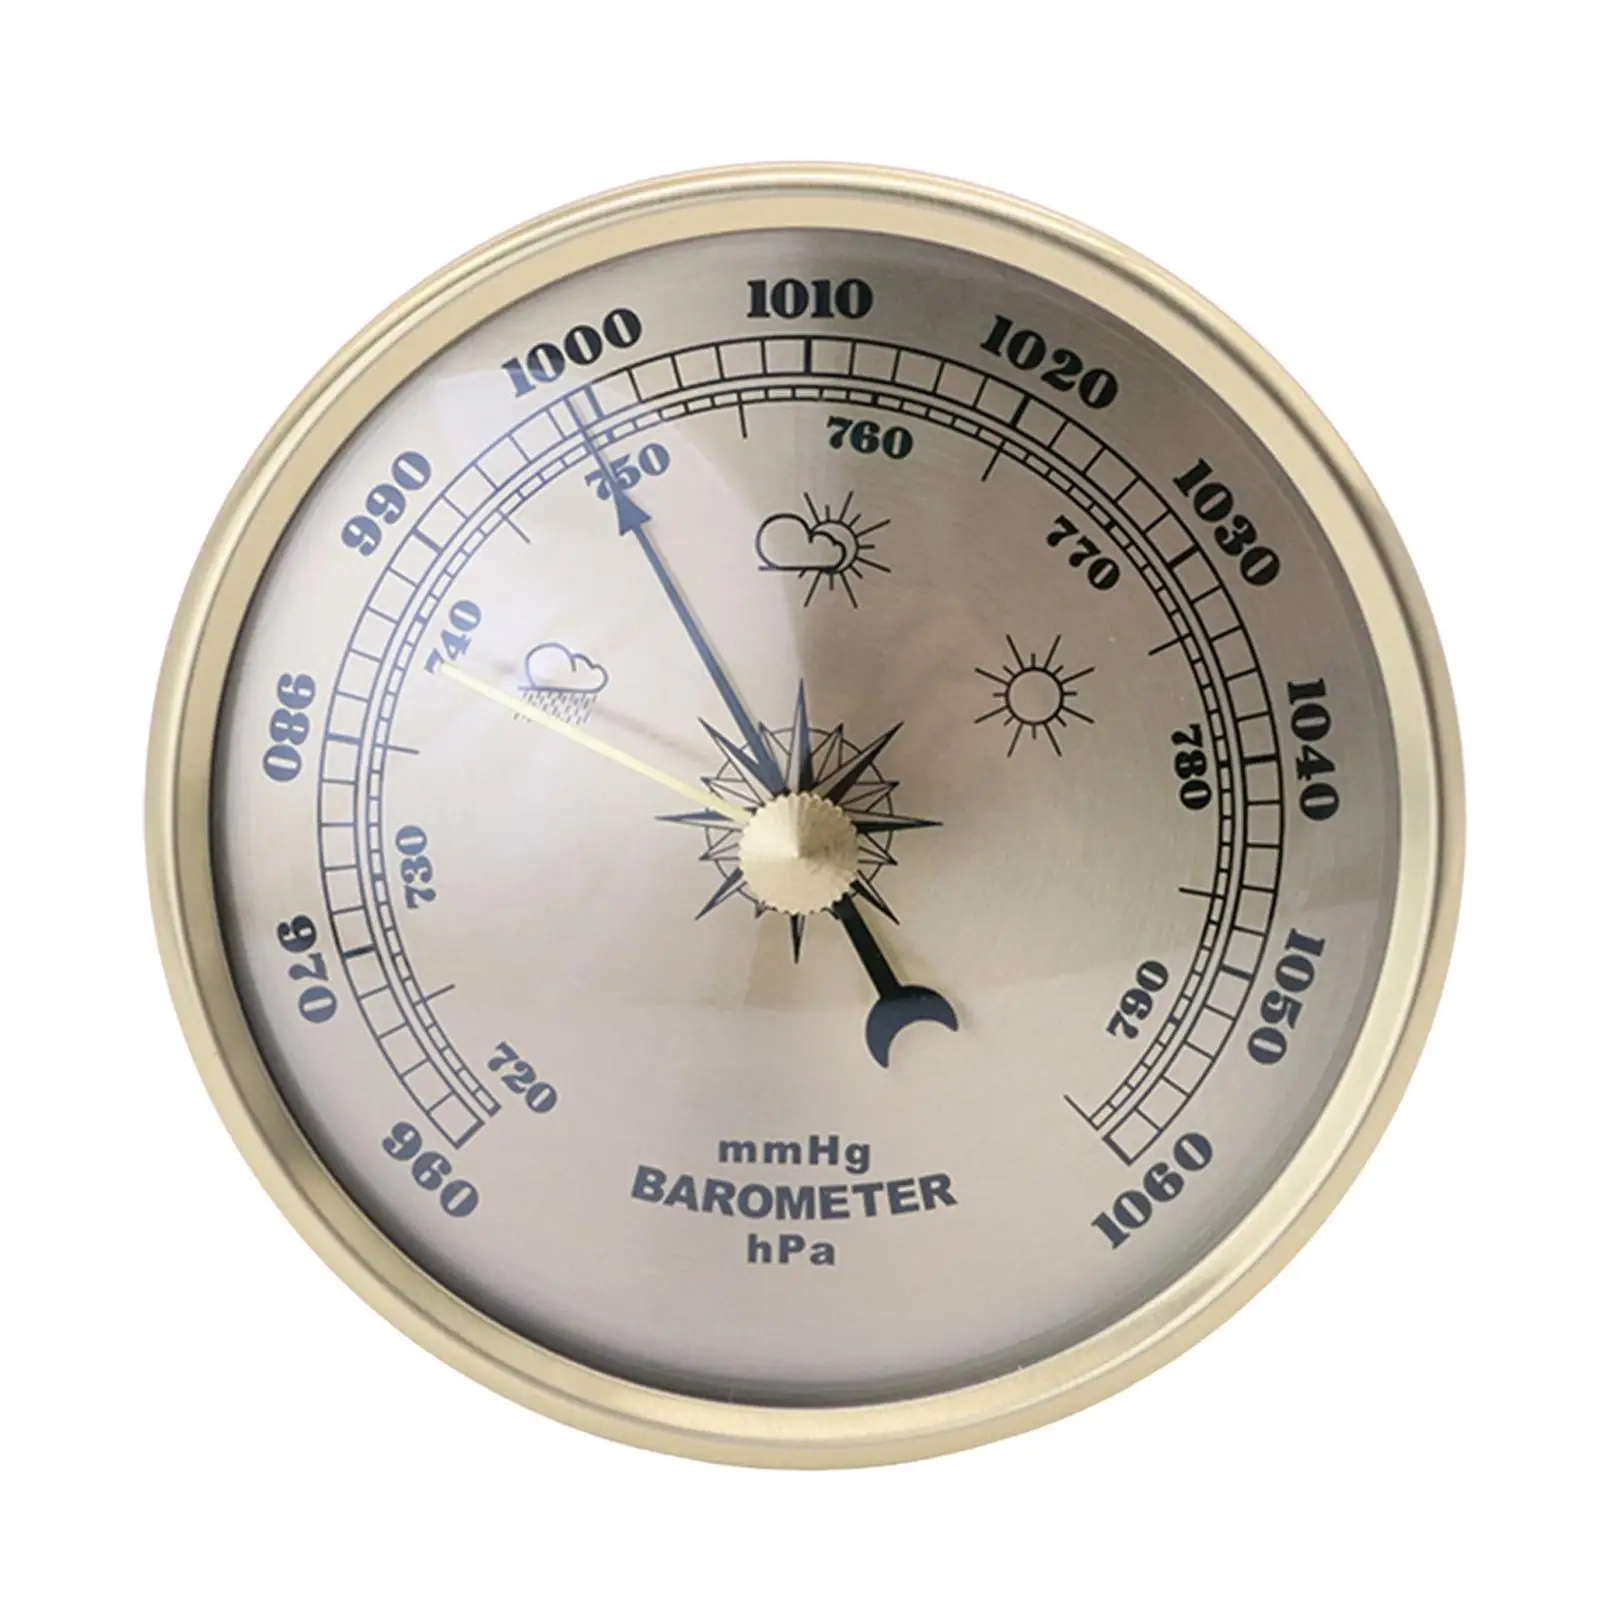 90mm Aneroid Barometer Round Dial Indoor Outdoor mmHg/Hpa Pressure Gauge